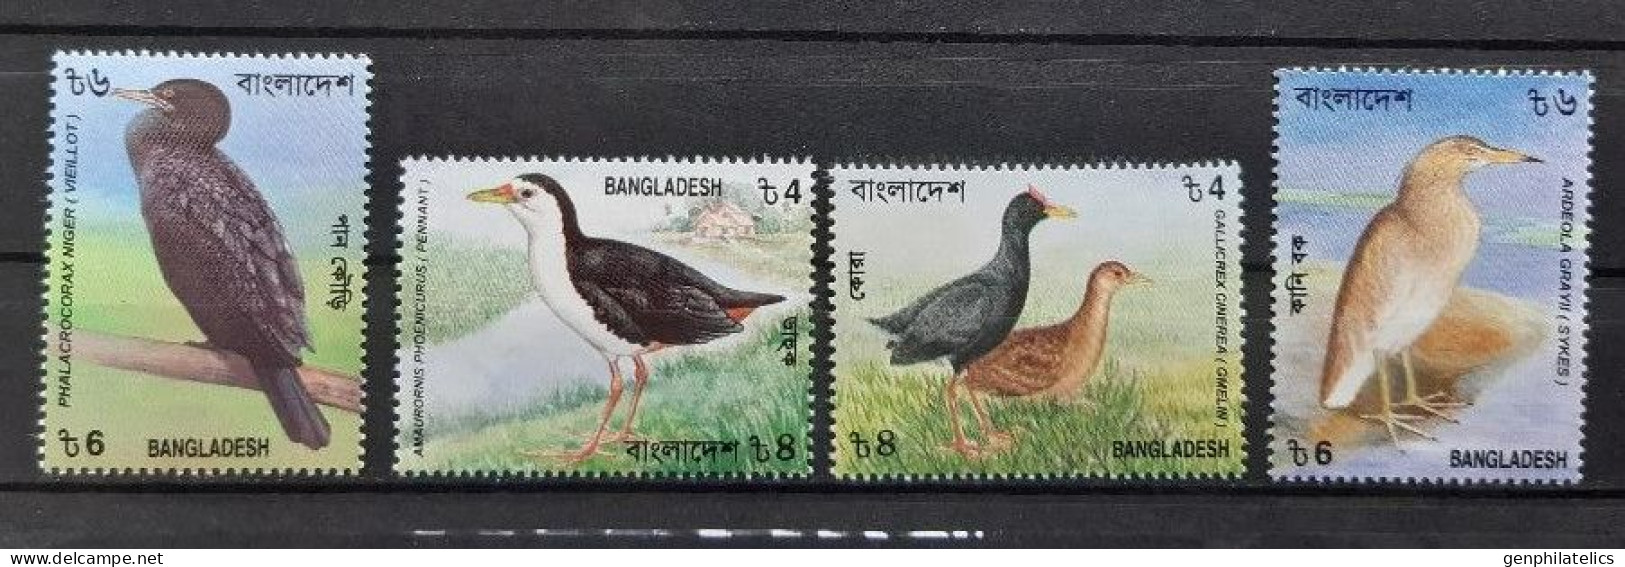 BANGLADESH 2000 FAUNA Animals BIRDS - Fine Set MNH - Bangladesch